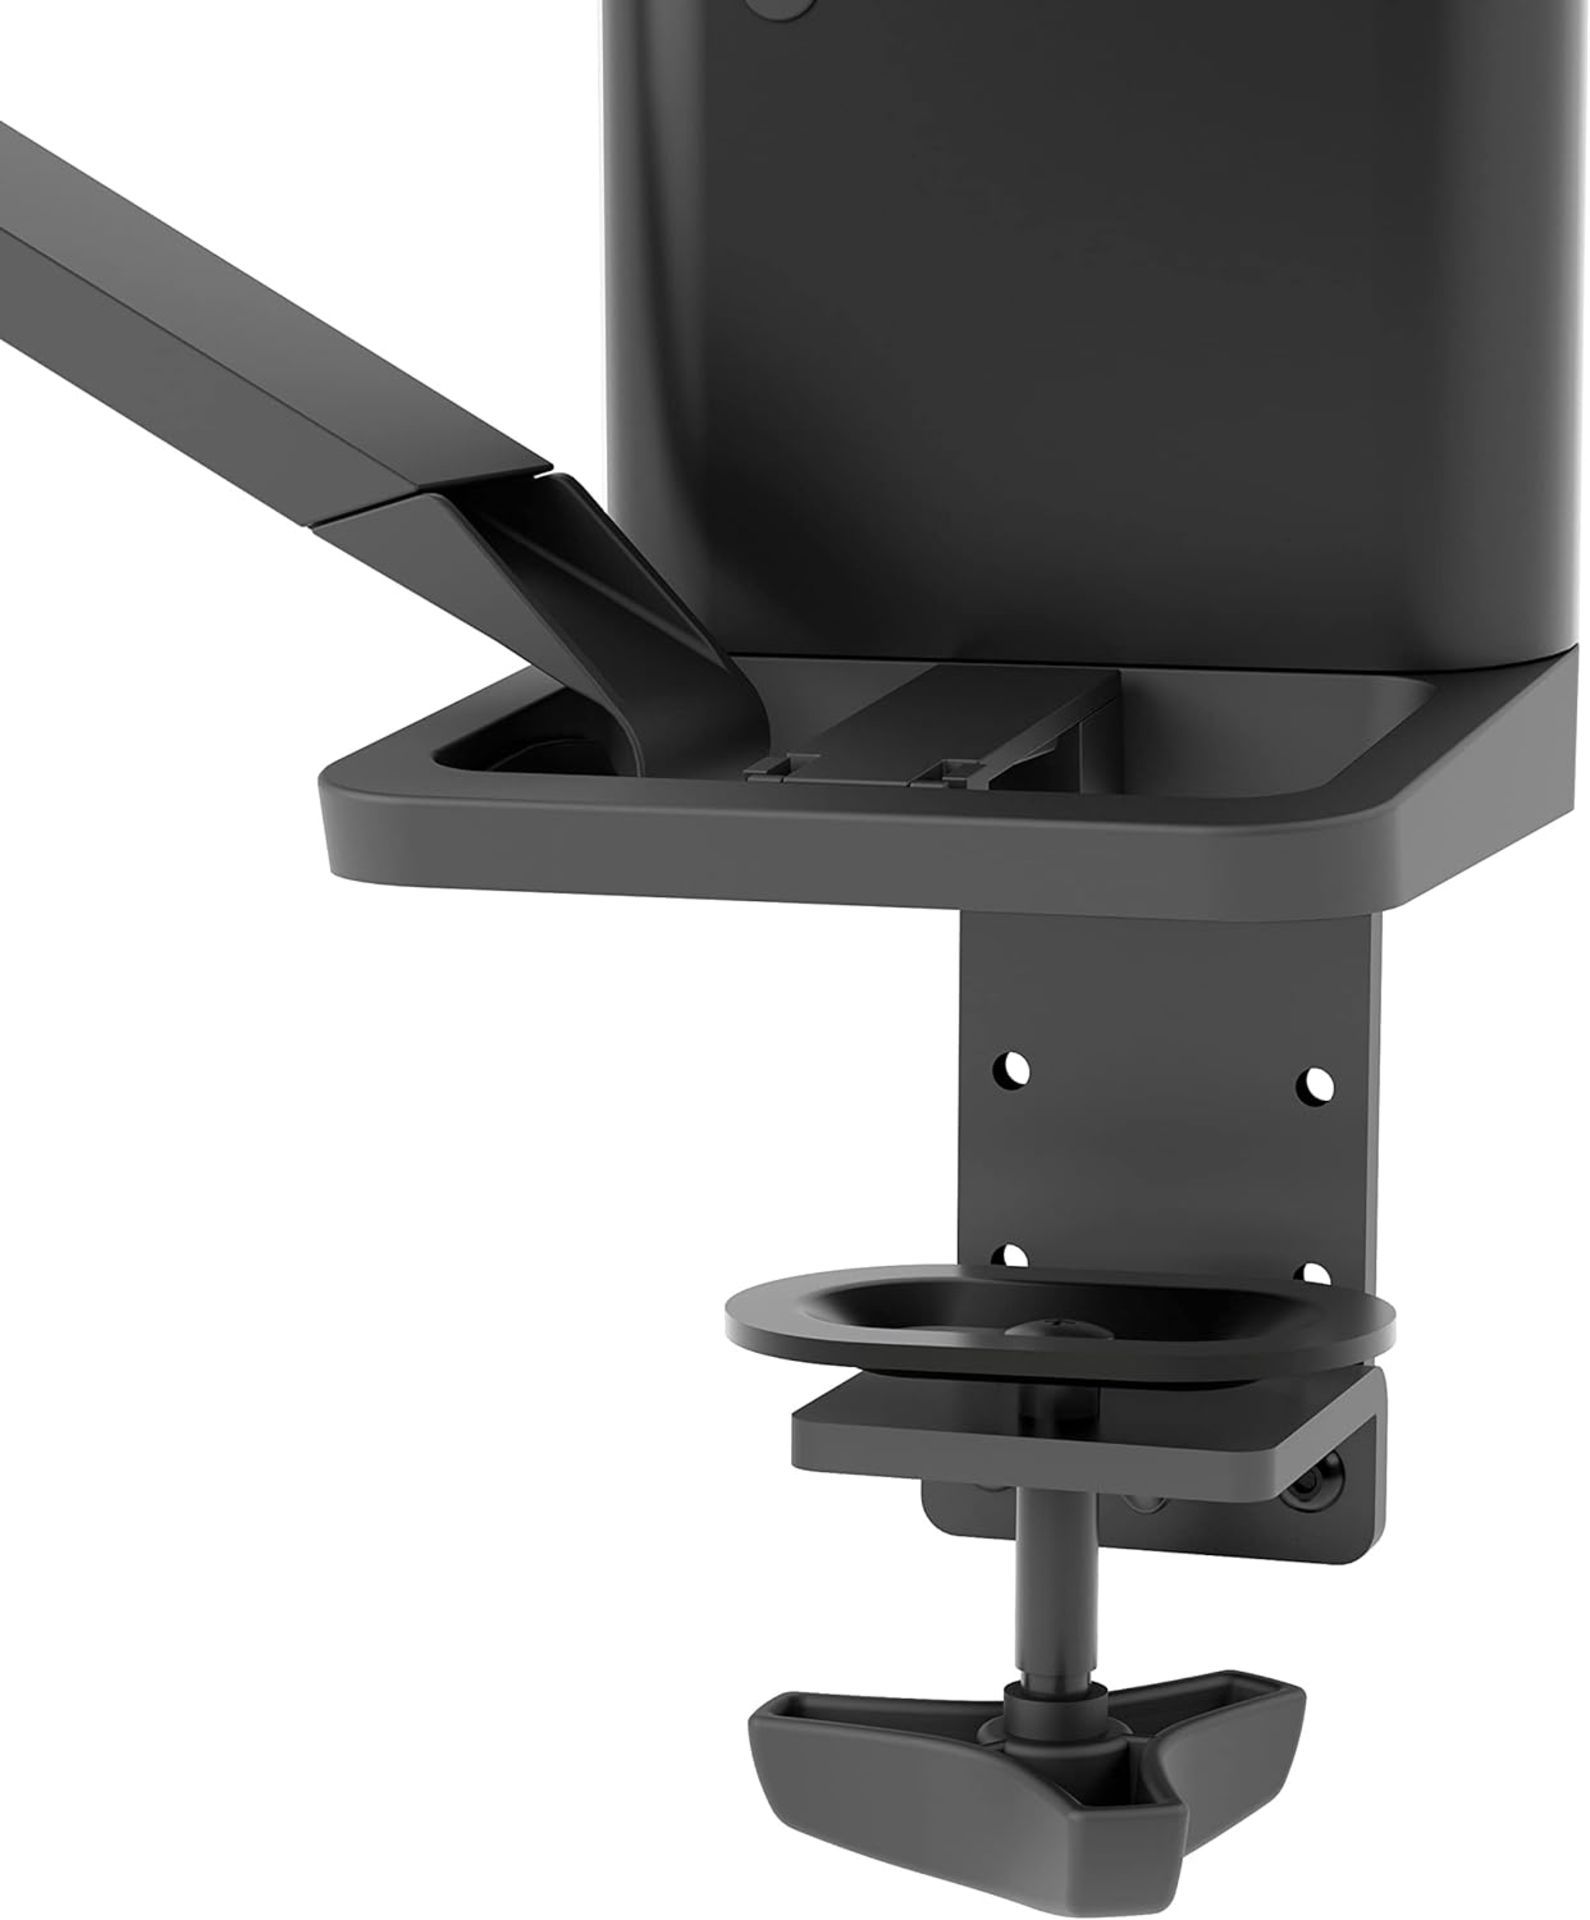 NEW & BOXED ERGOTRON Trace Dual Monitor Arm, VESA Desk Mount. RRP £417. (PCK5). for 2 Monitors Up to - Bild 8 aus 8